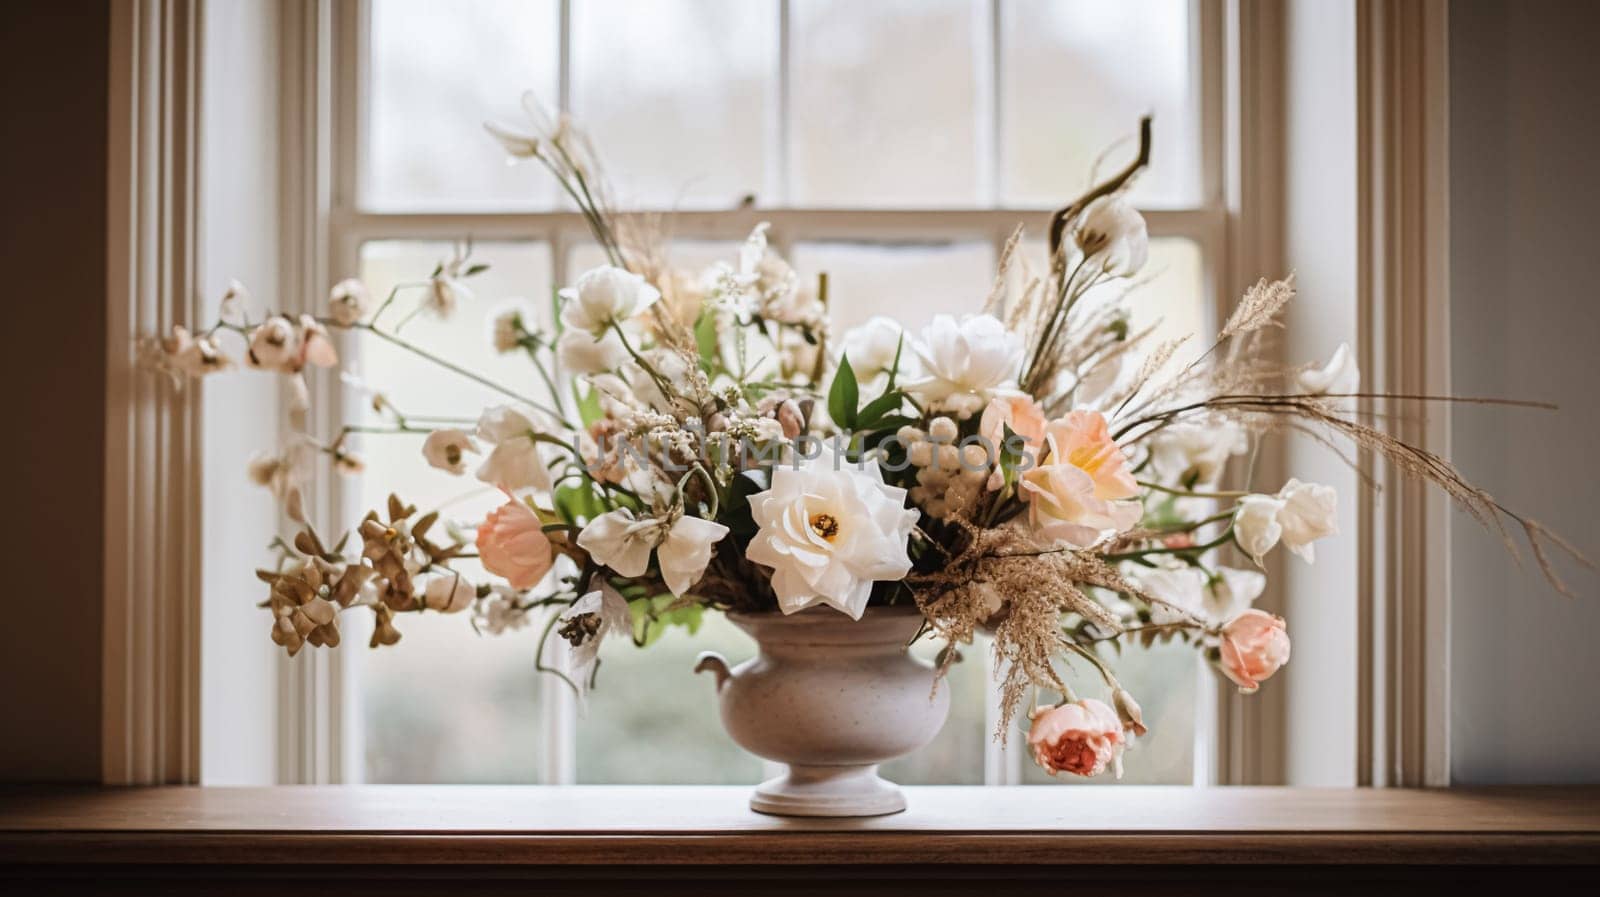 Beautiful bouquet of flowers in a vase. Floral arrangement